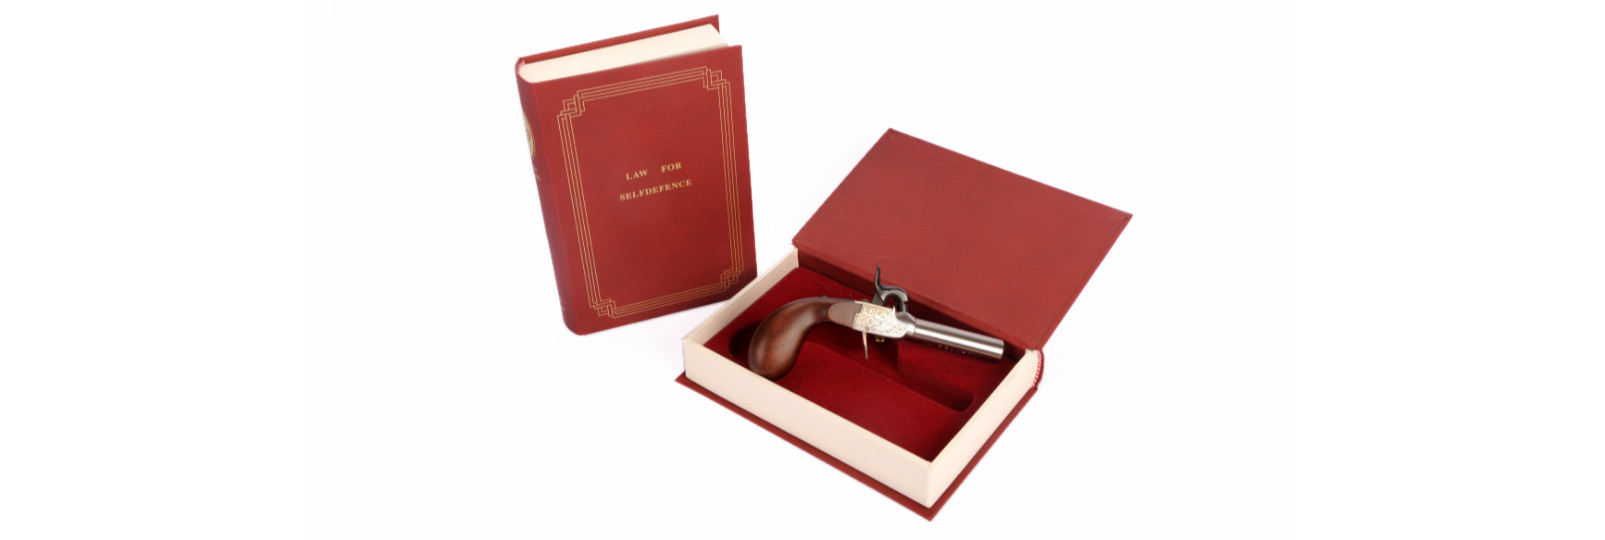 Derringer lx pistol .44 in book case